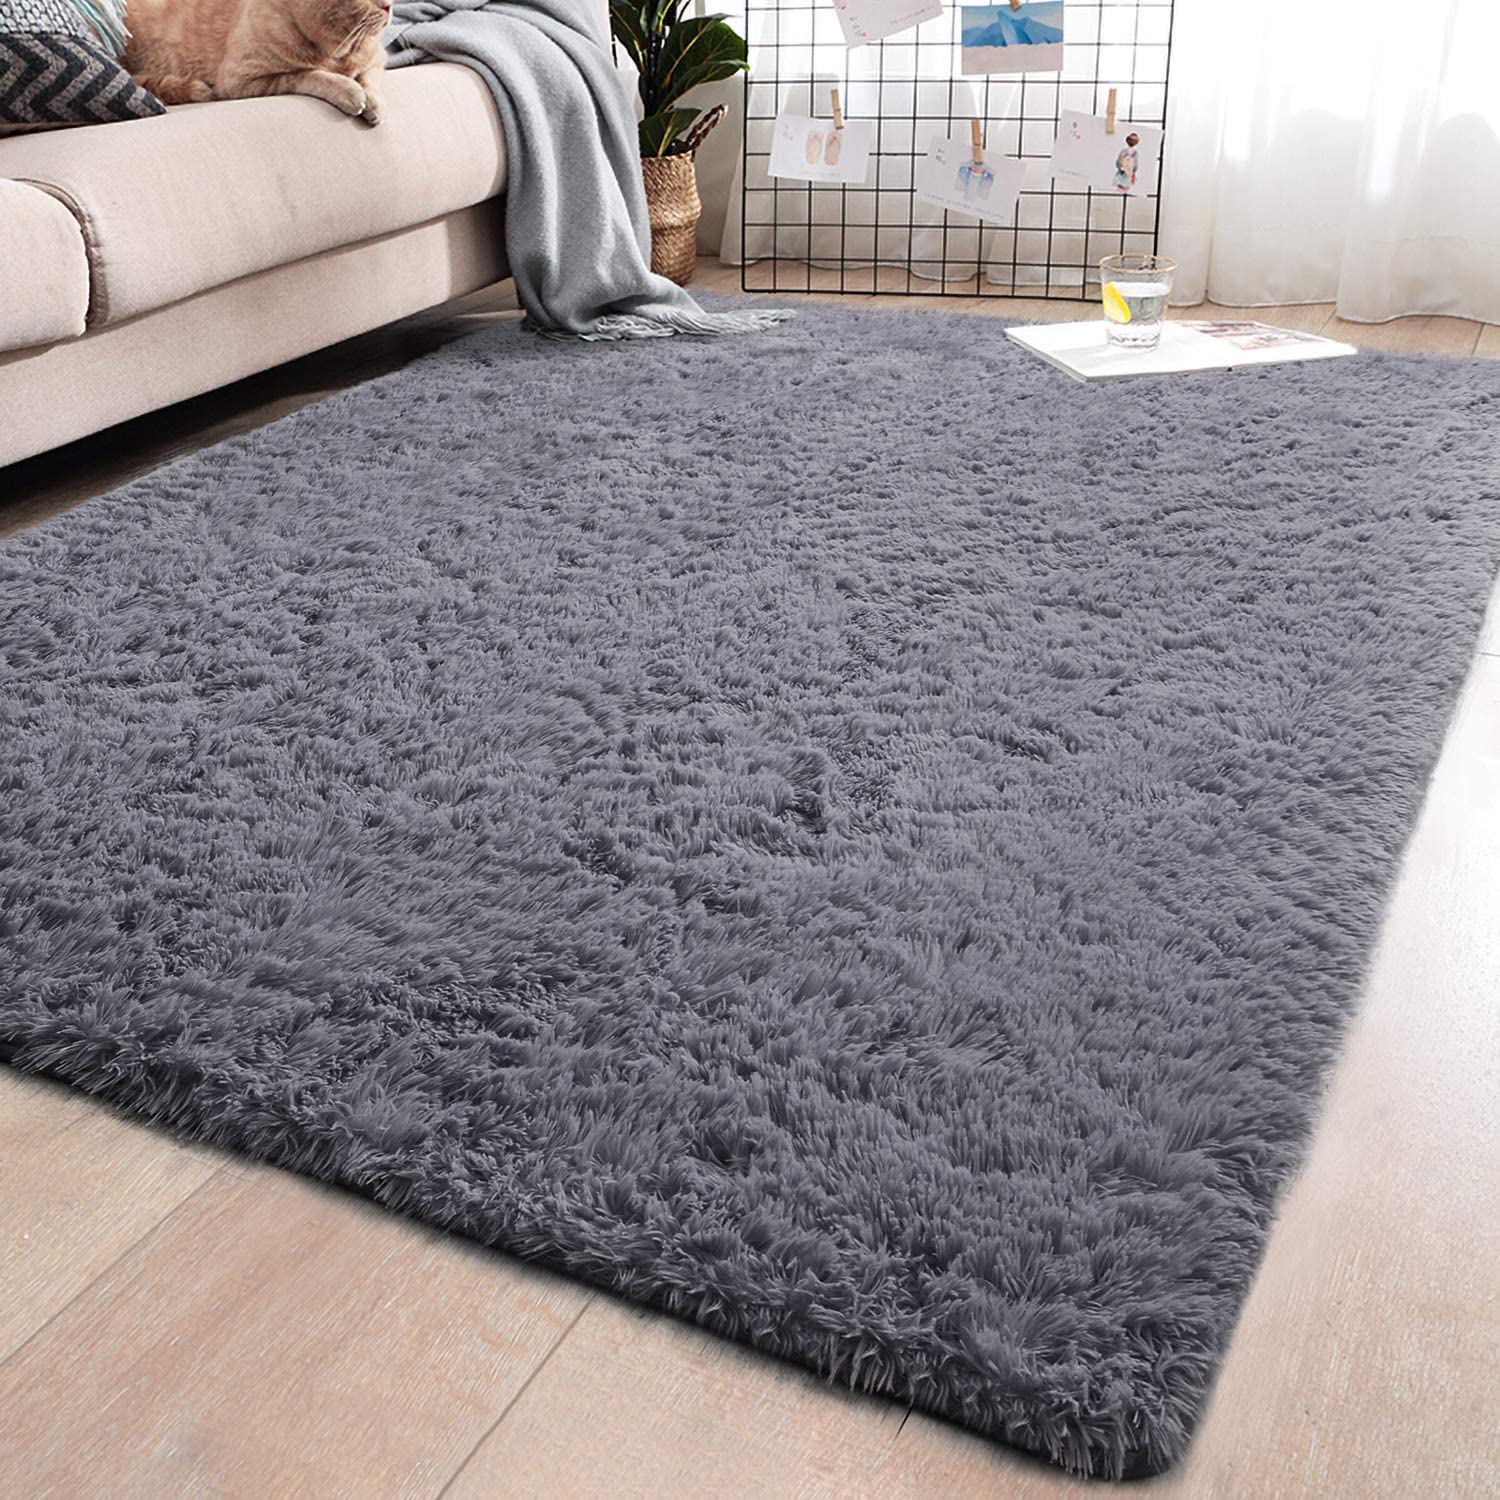 US STOCK Home Fluffy Anti-Skid Shaggy Area Rug Room Bedroom Carpet Floor Mat 